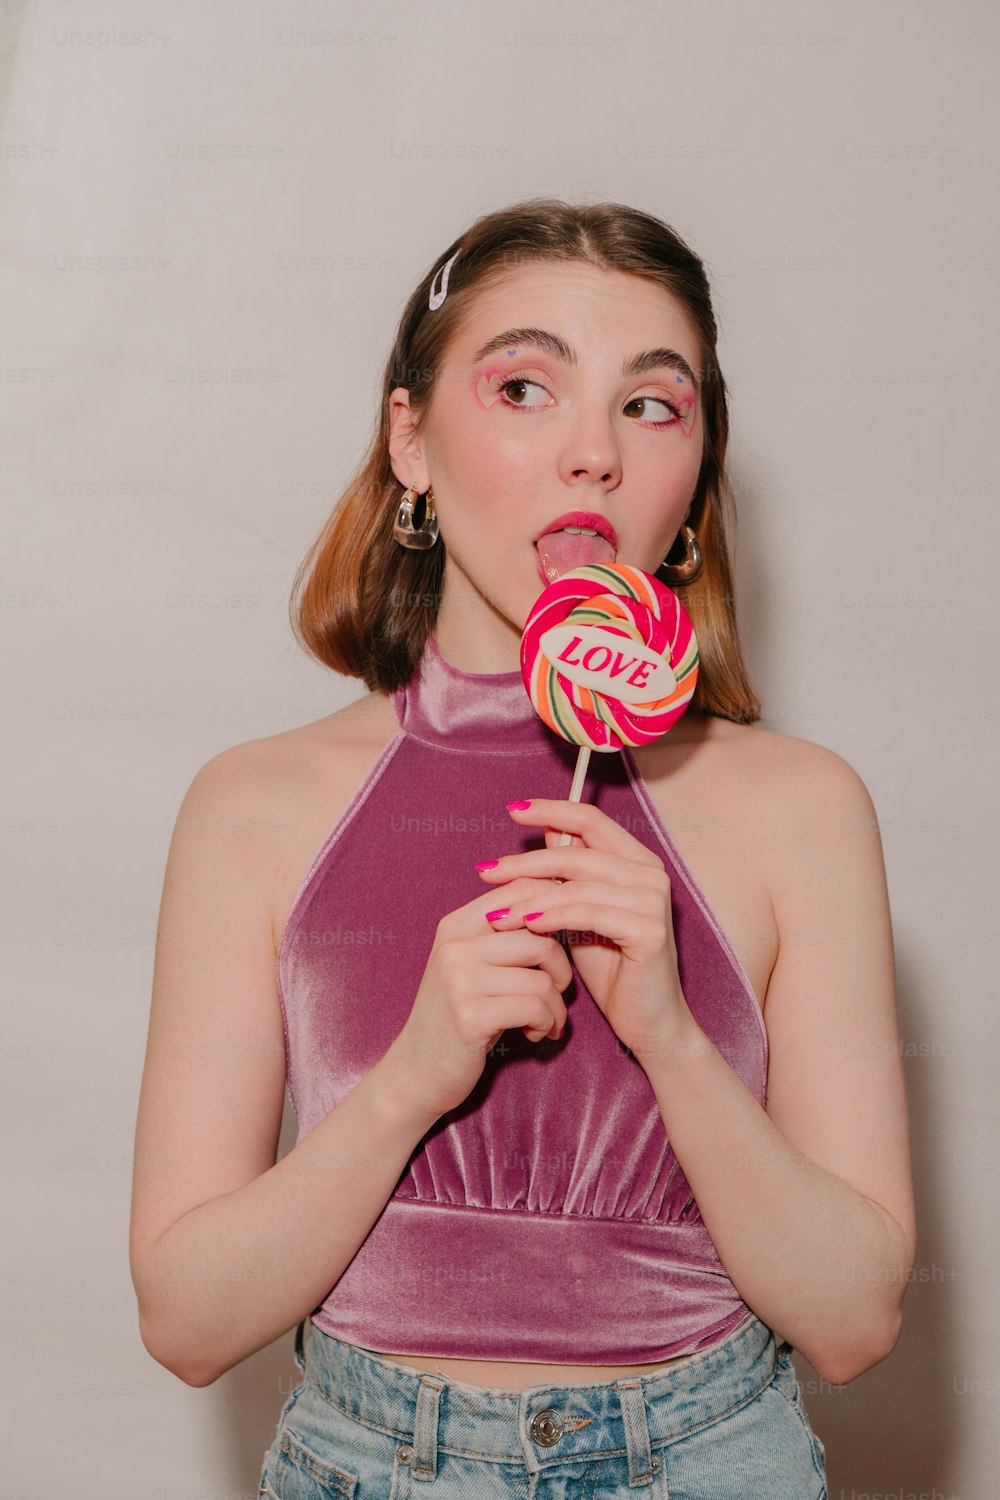 a girl in a purple top is holding a lollipop